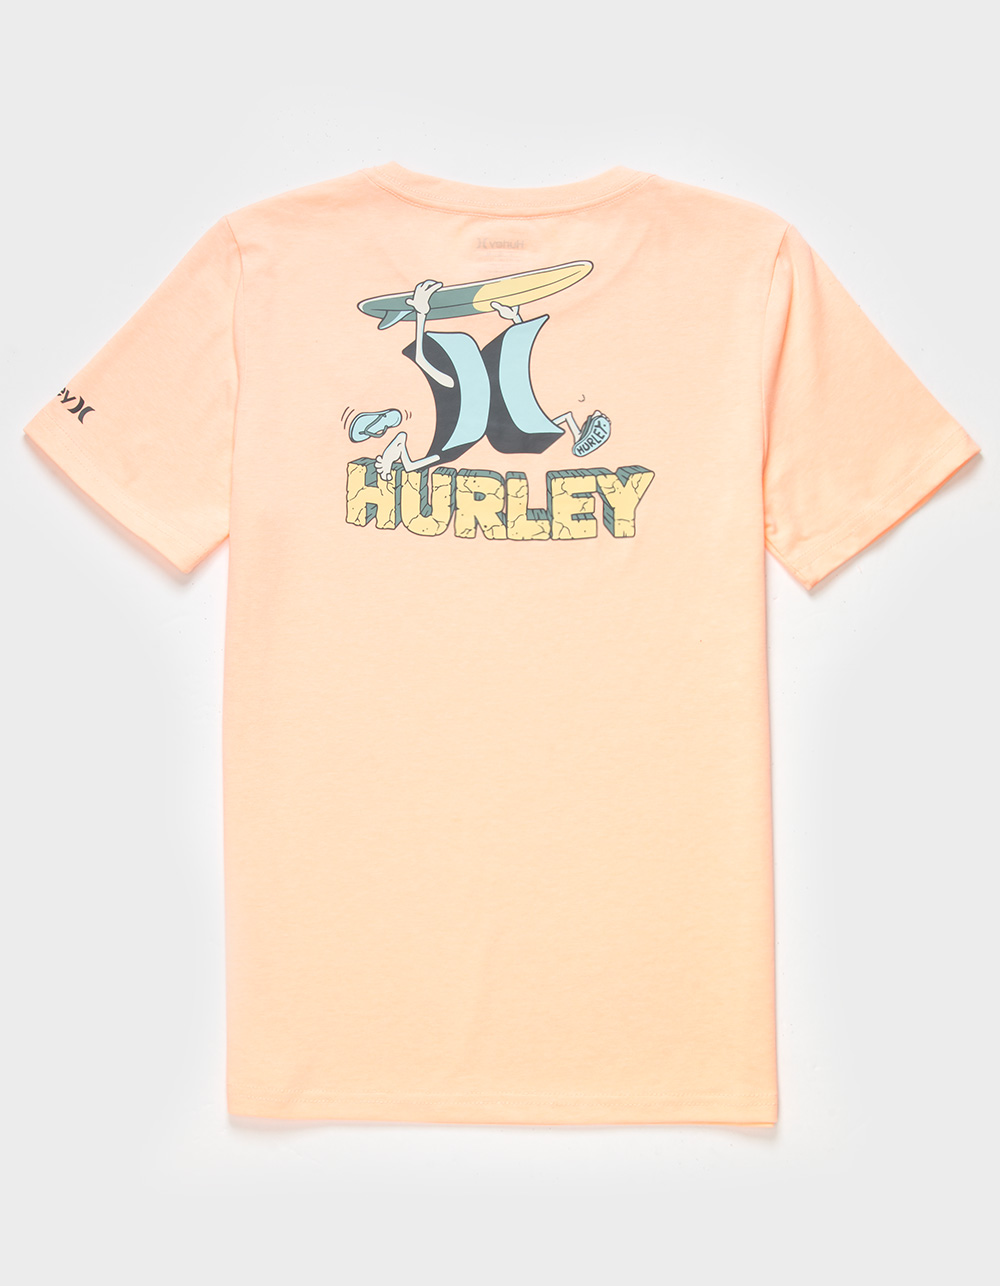 HURLEY Surfsup Mascot Boys Tee